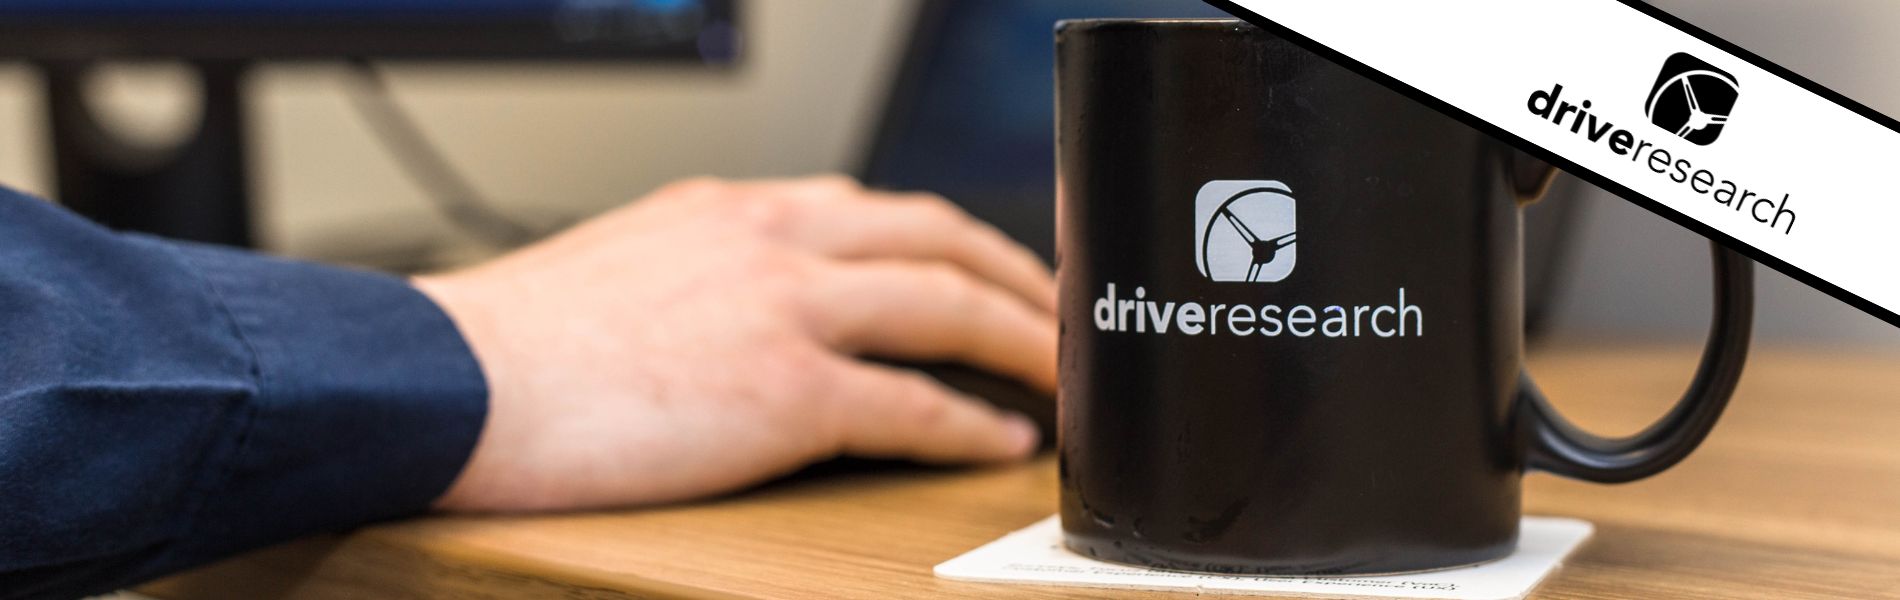 Drive Research Coffee Mug